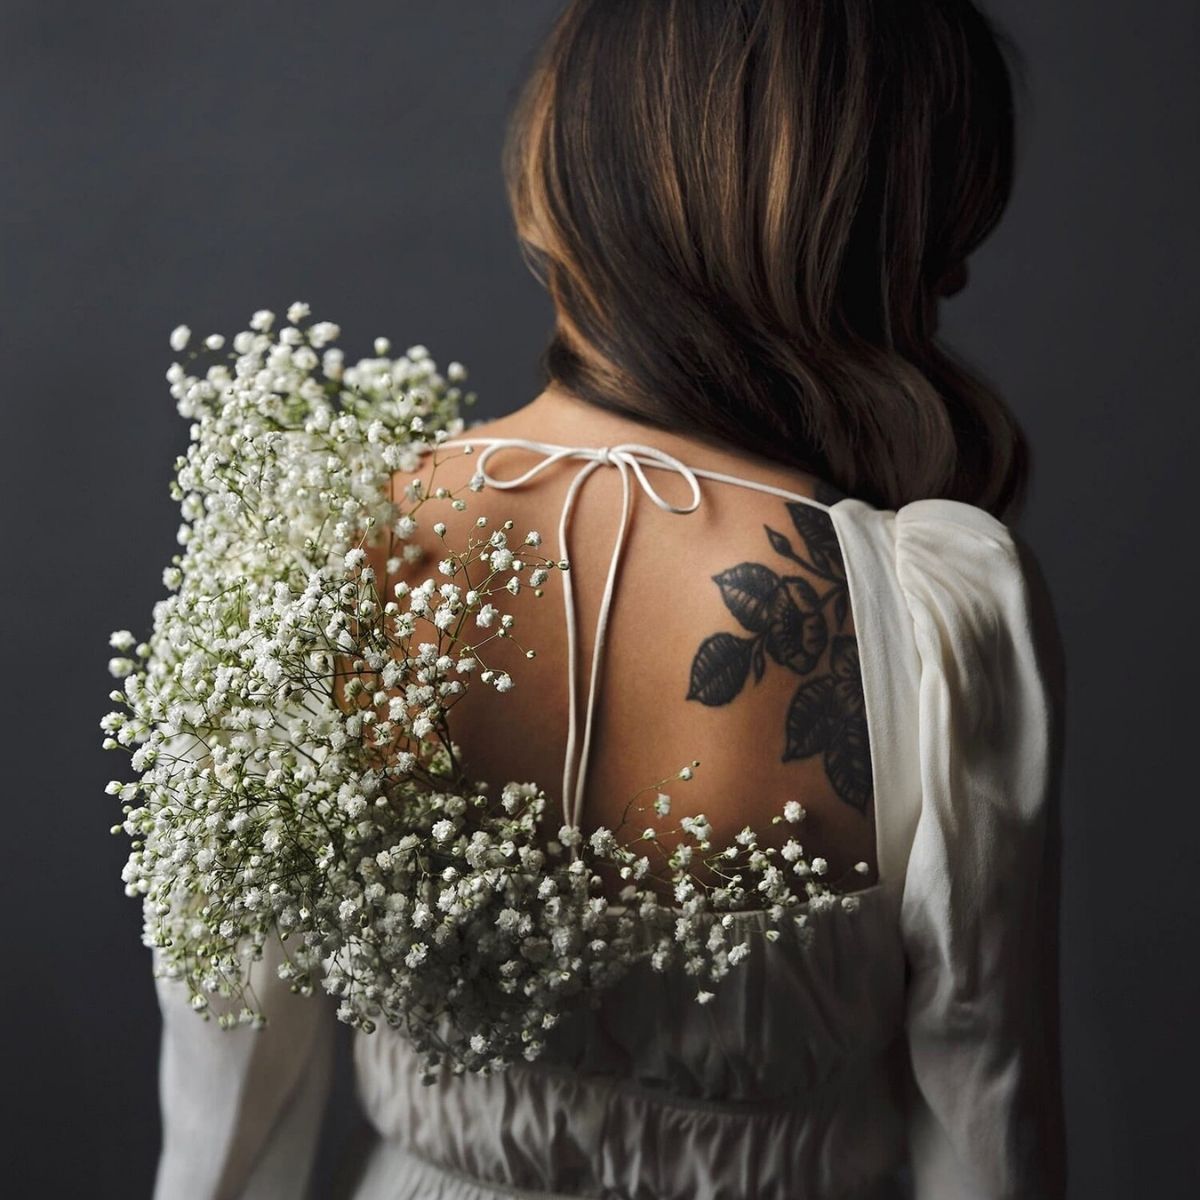 Rachel Clark With Her Beautiful Tattoo and Flowers on Thursd